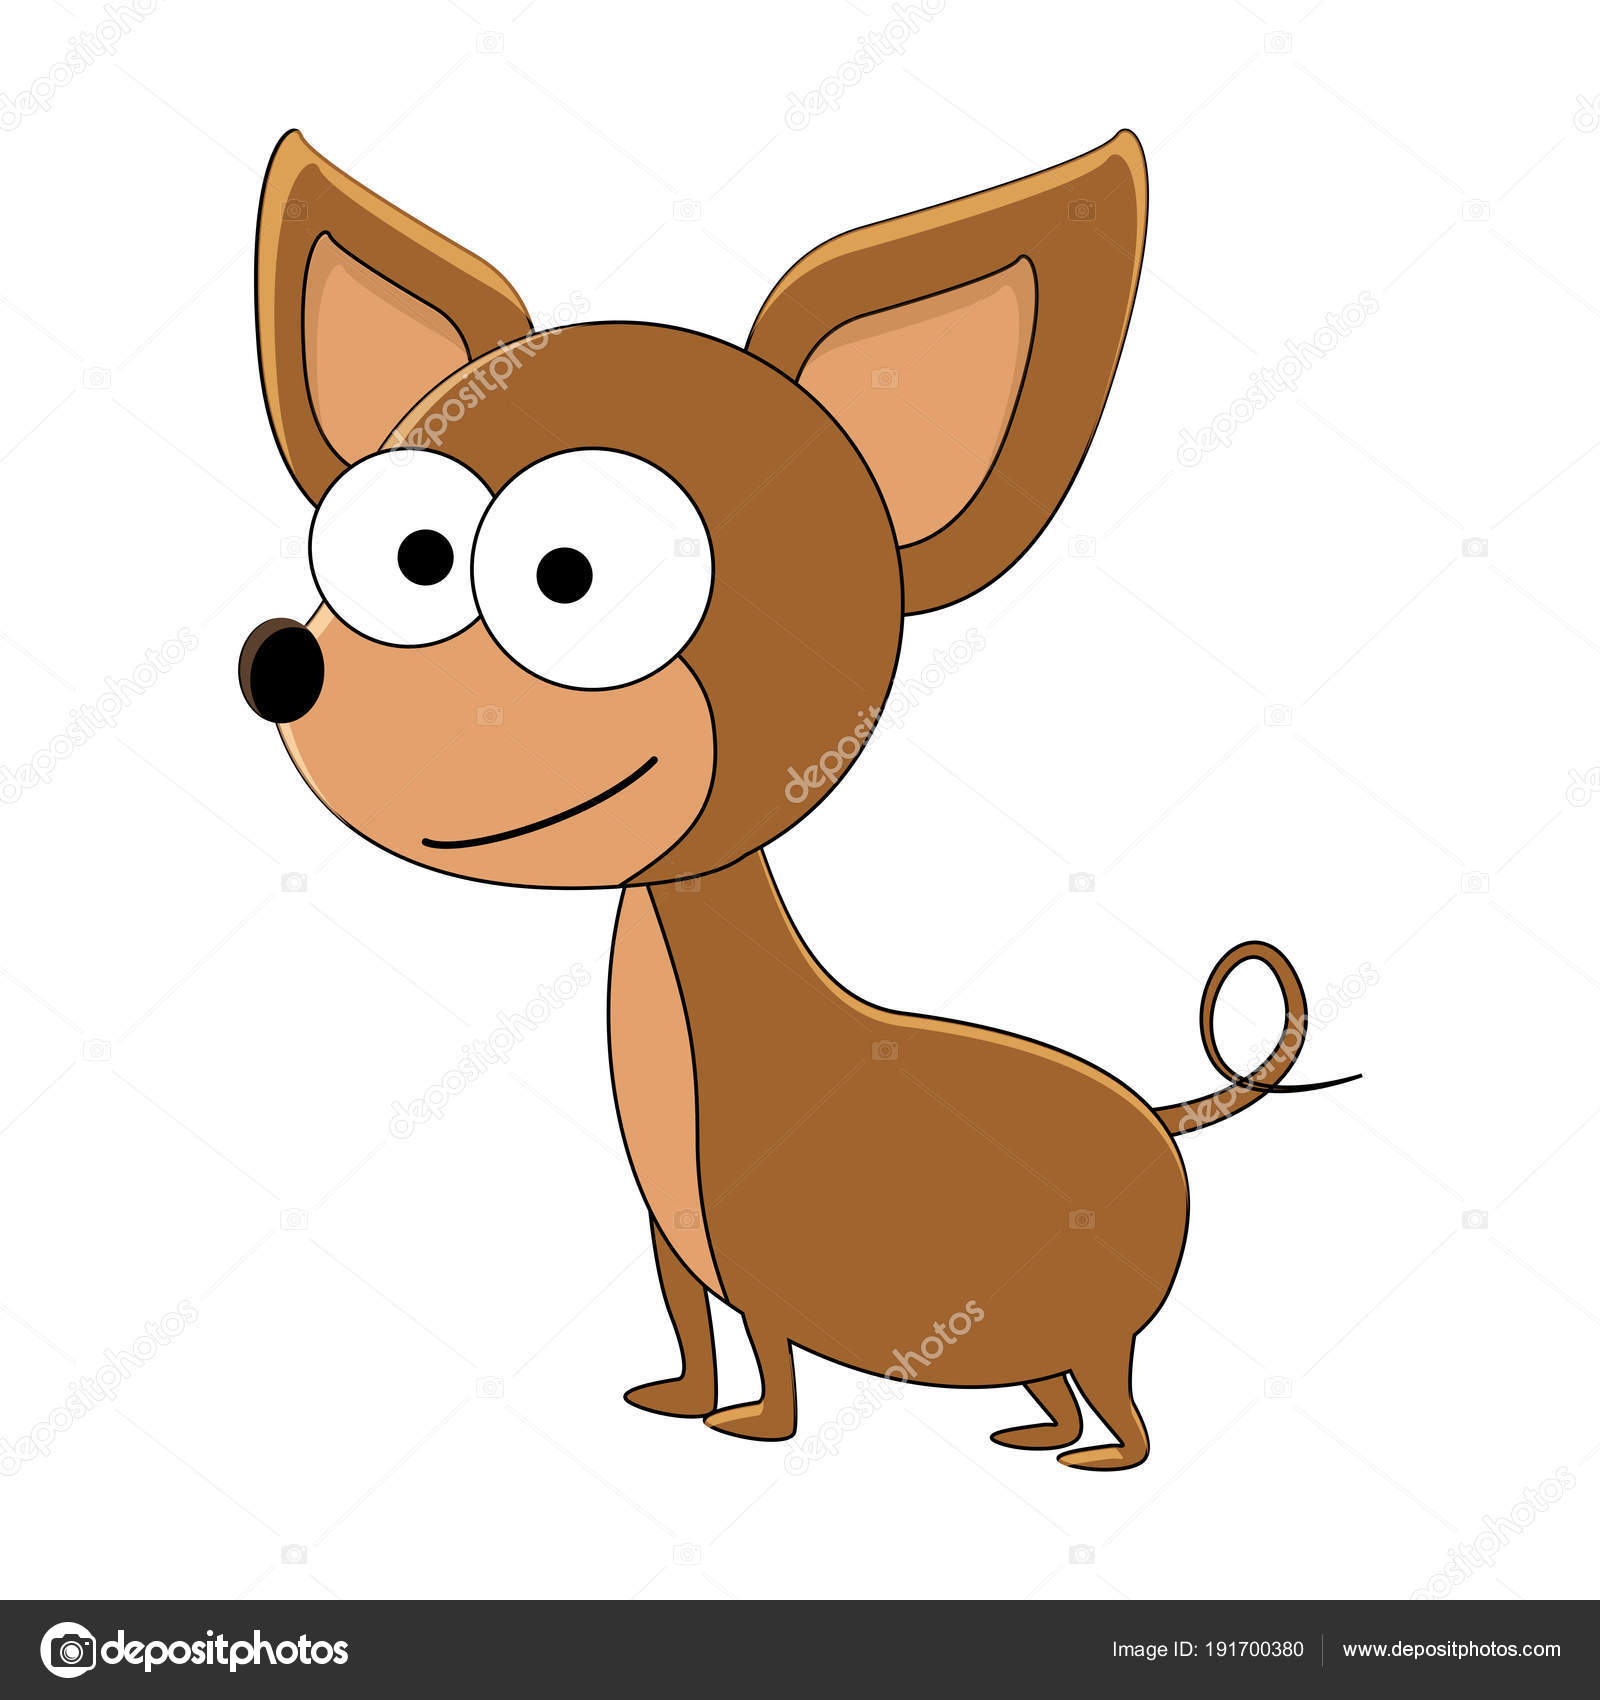 23+ Cute Poodle Dog Cartoon